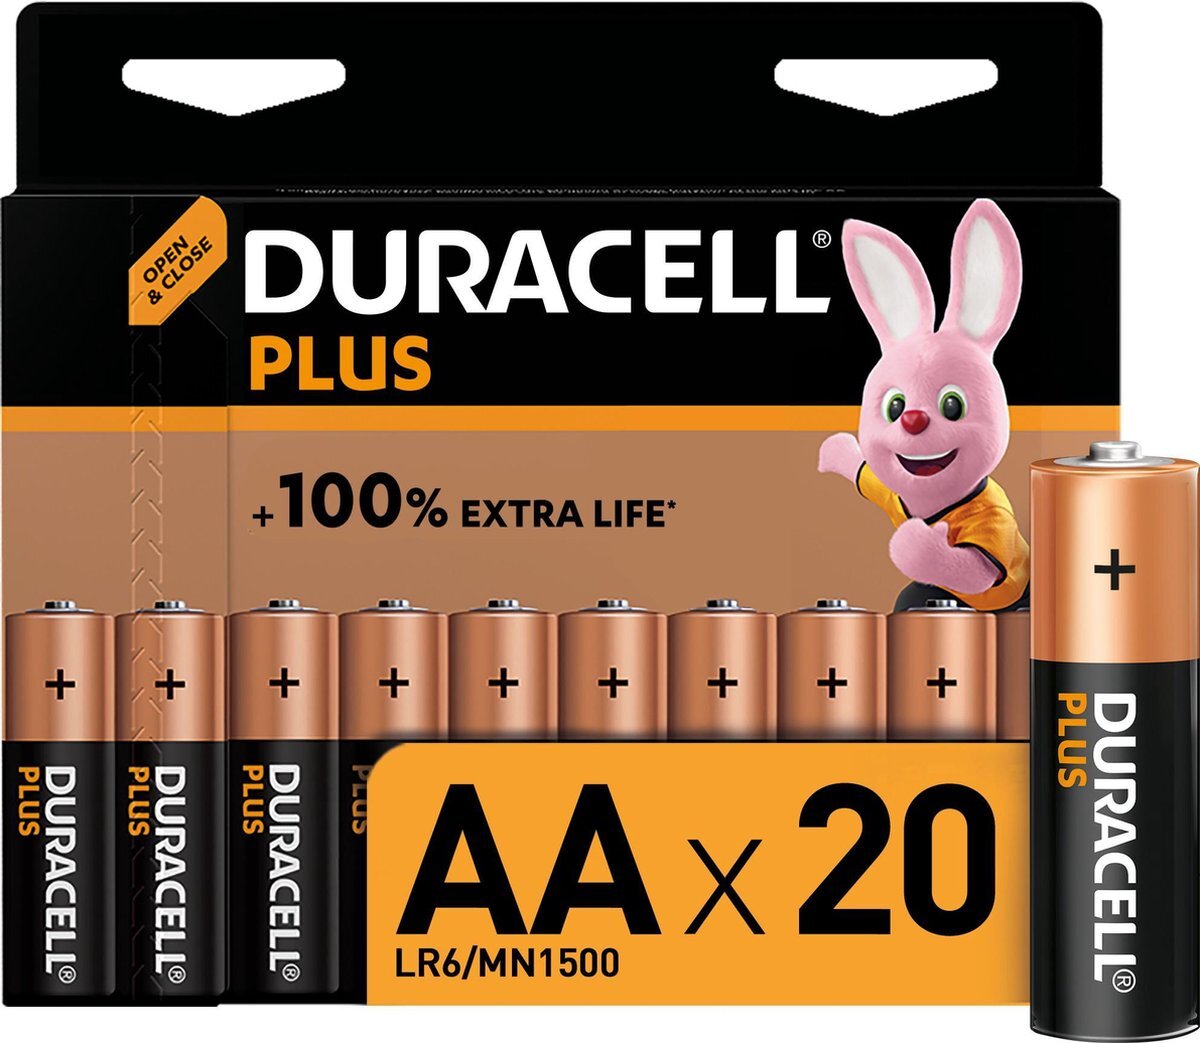 Duracell Plus Alkaline AA batterijen, 20 stuks